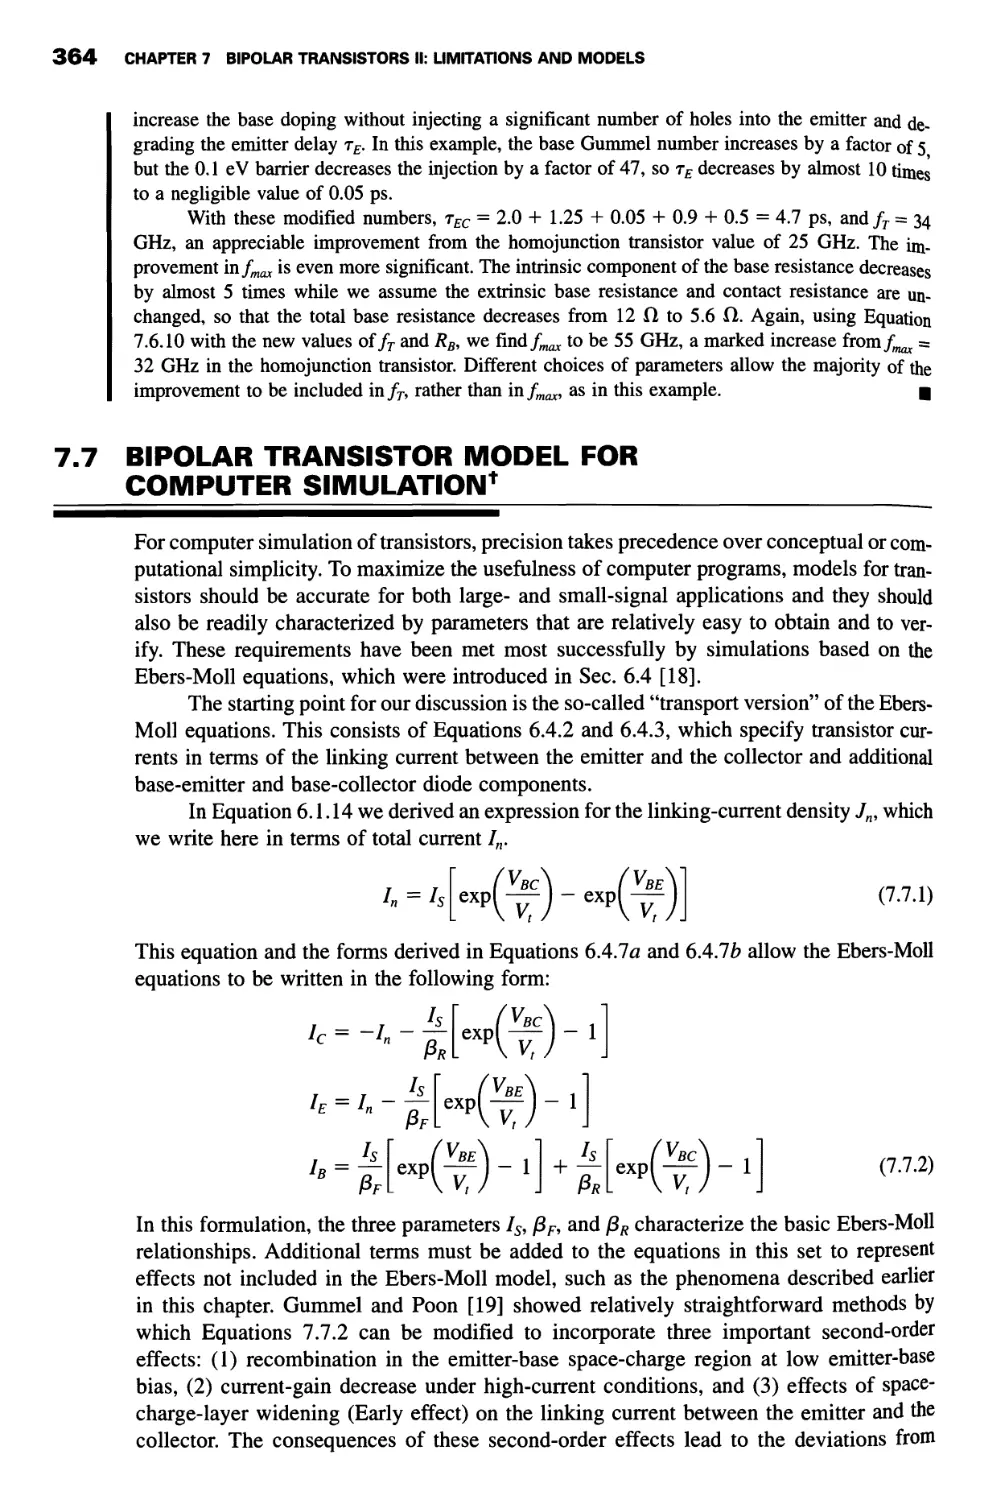 7.7 Bipolar Transistor Model for Computer Simulation